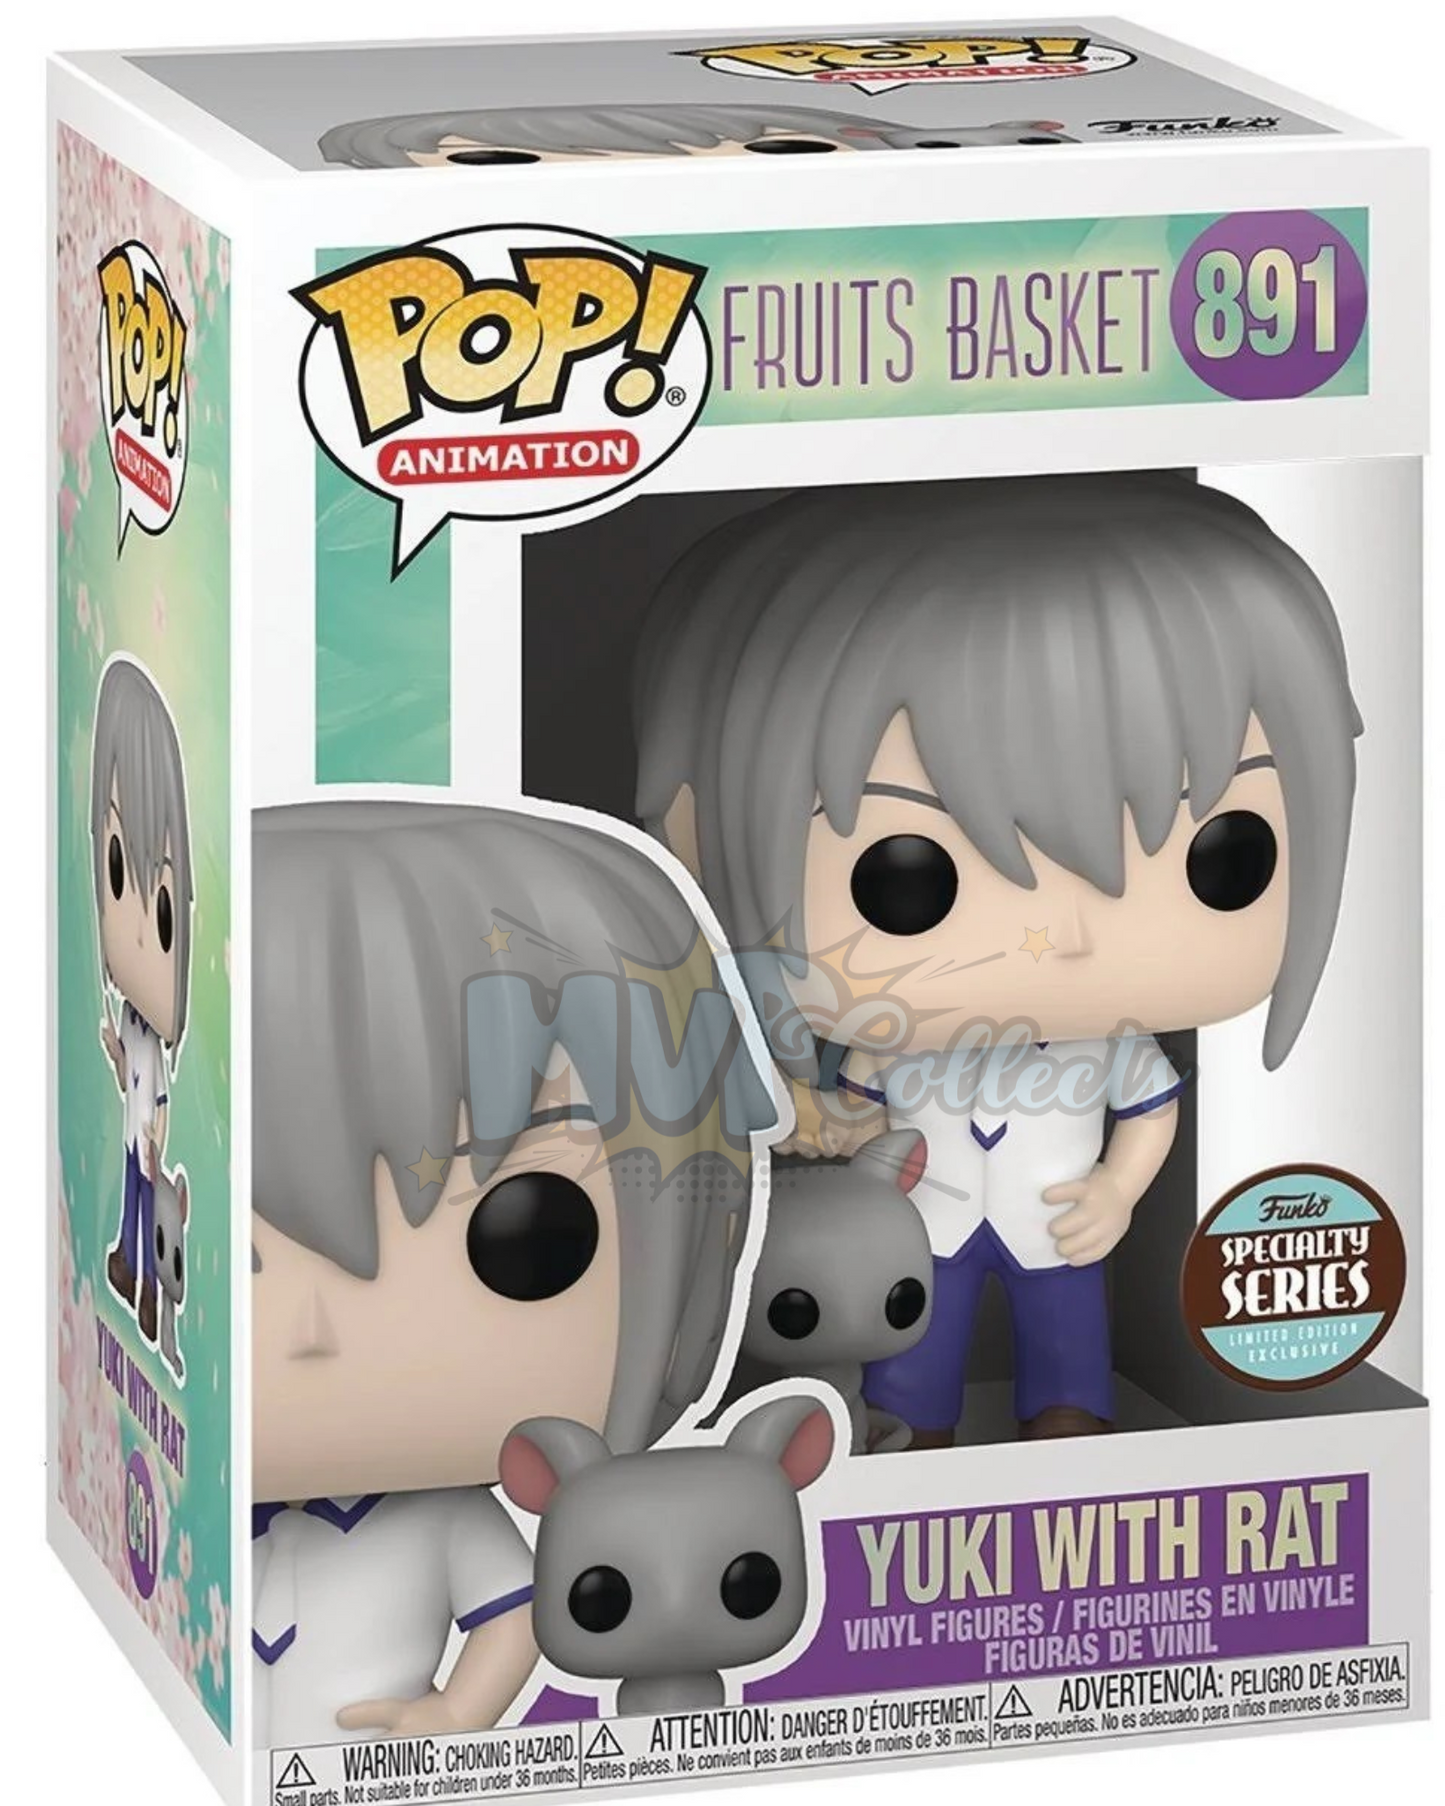 Yuki with Rat POP! (Fruit Basket) 891 Specialty Series